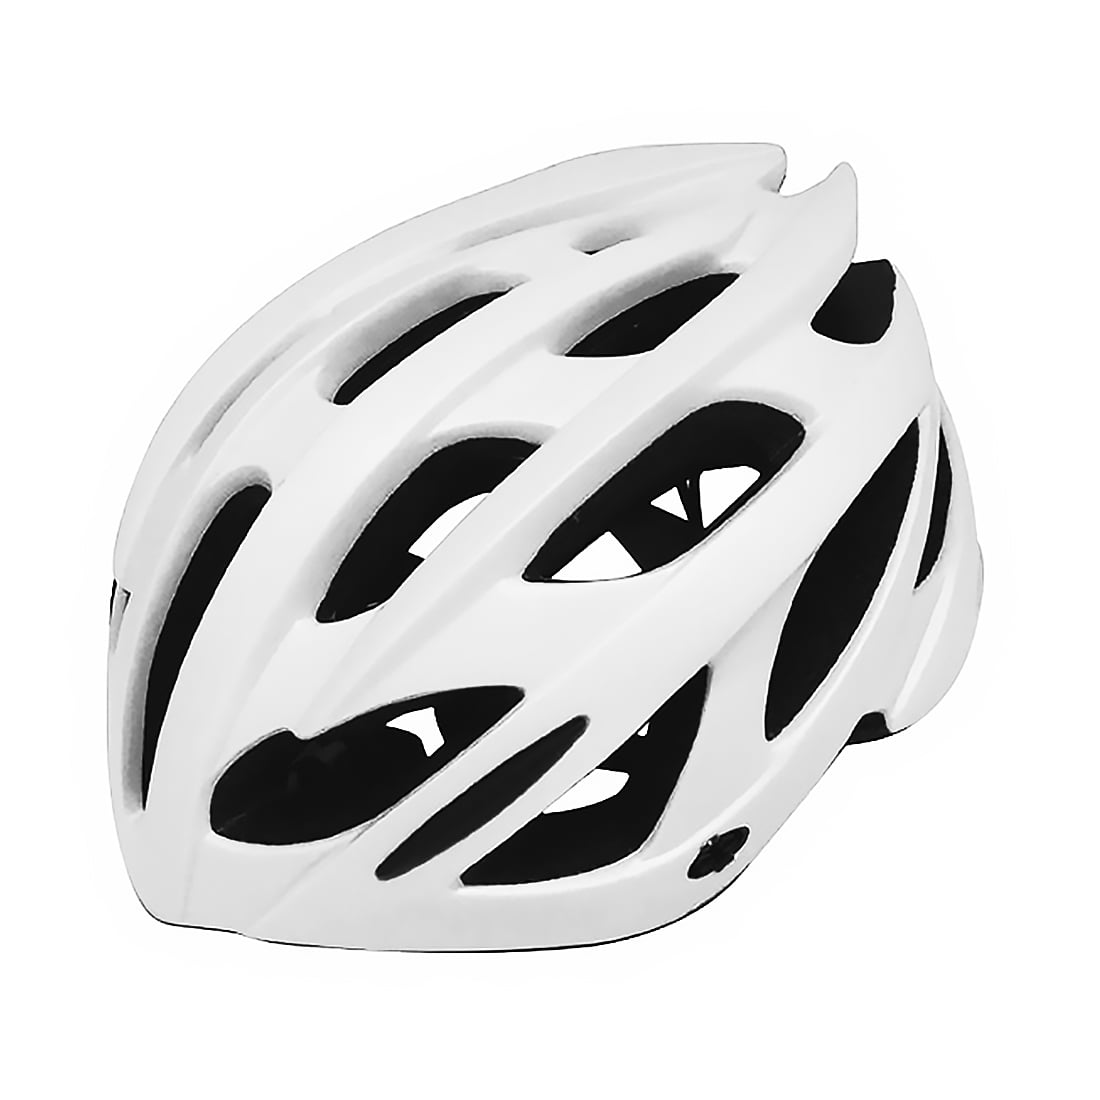 MERIDA Road Mountain E-Bike Bicycle Adult Bike Helmet for Men&Women Green L-size 